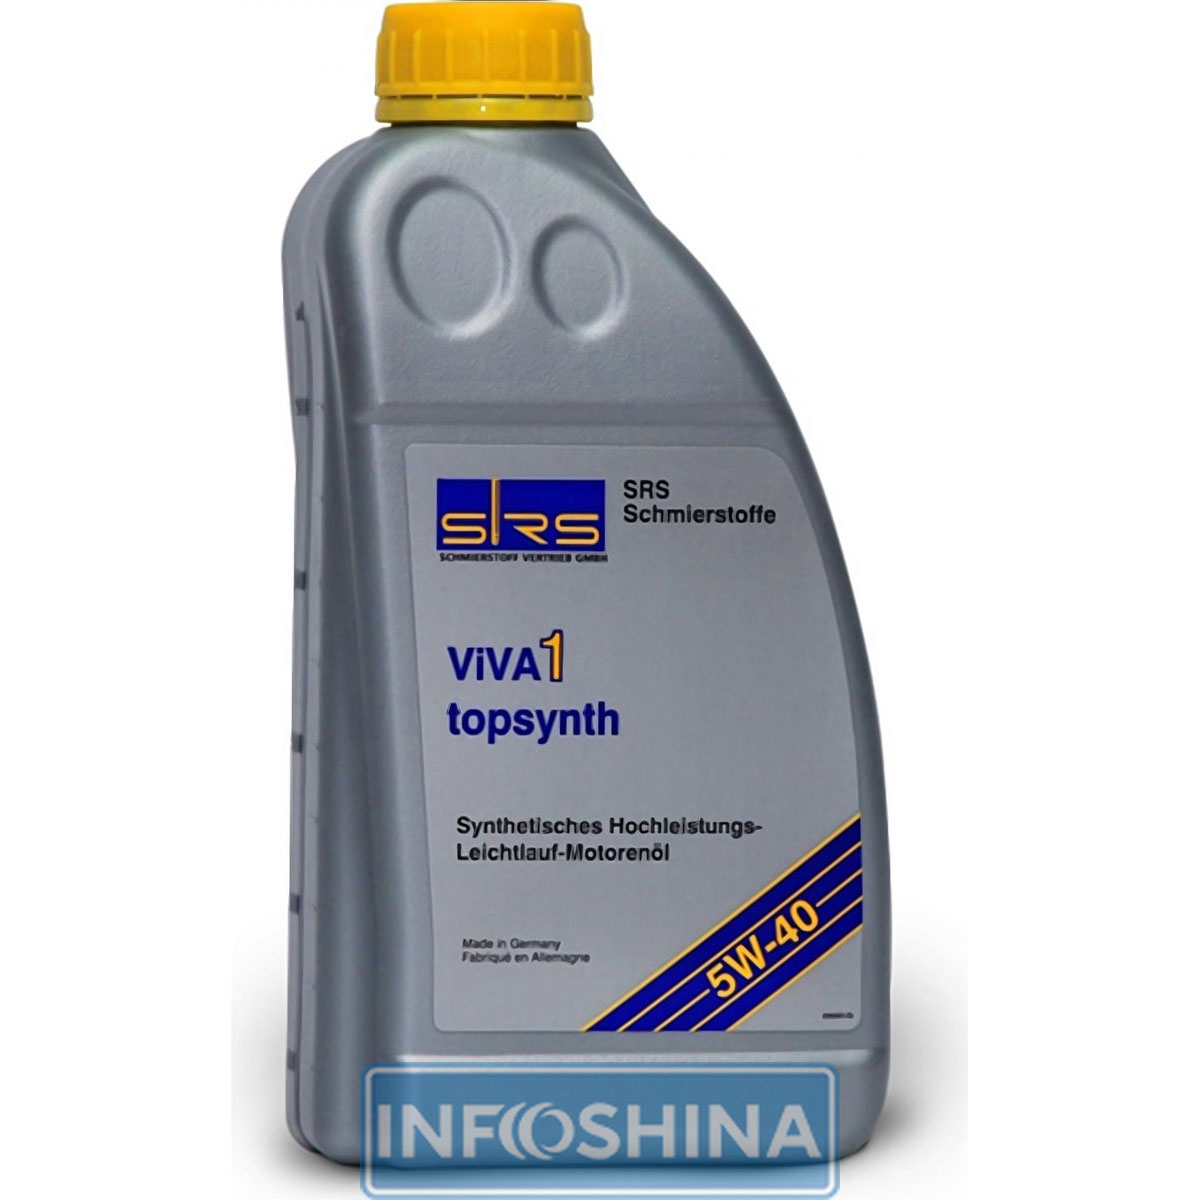 Купити масло SRS ViVA 1 topsynth 5W-40 (1л)